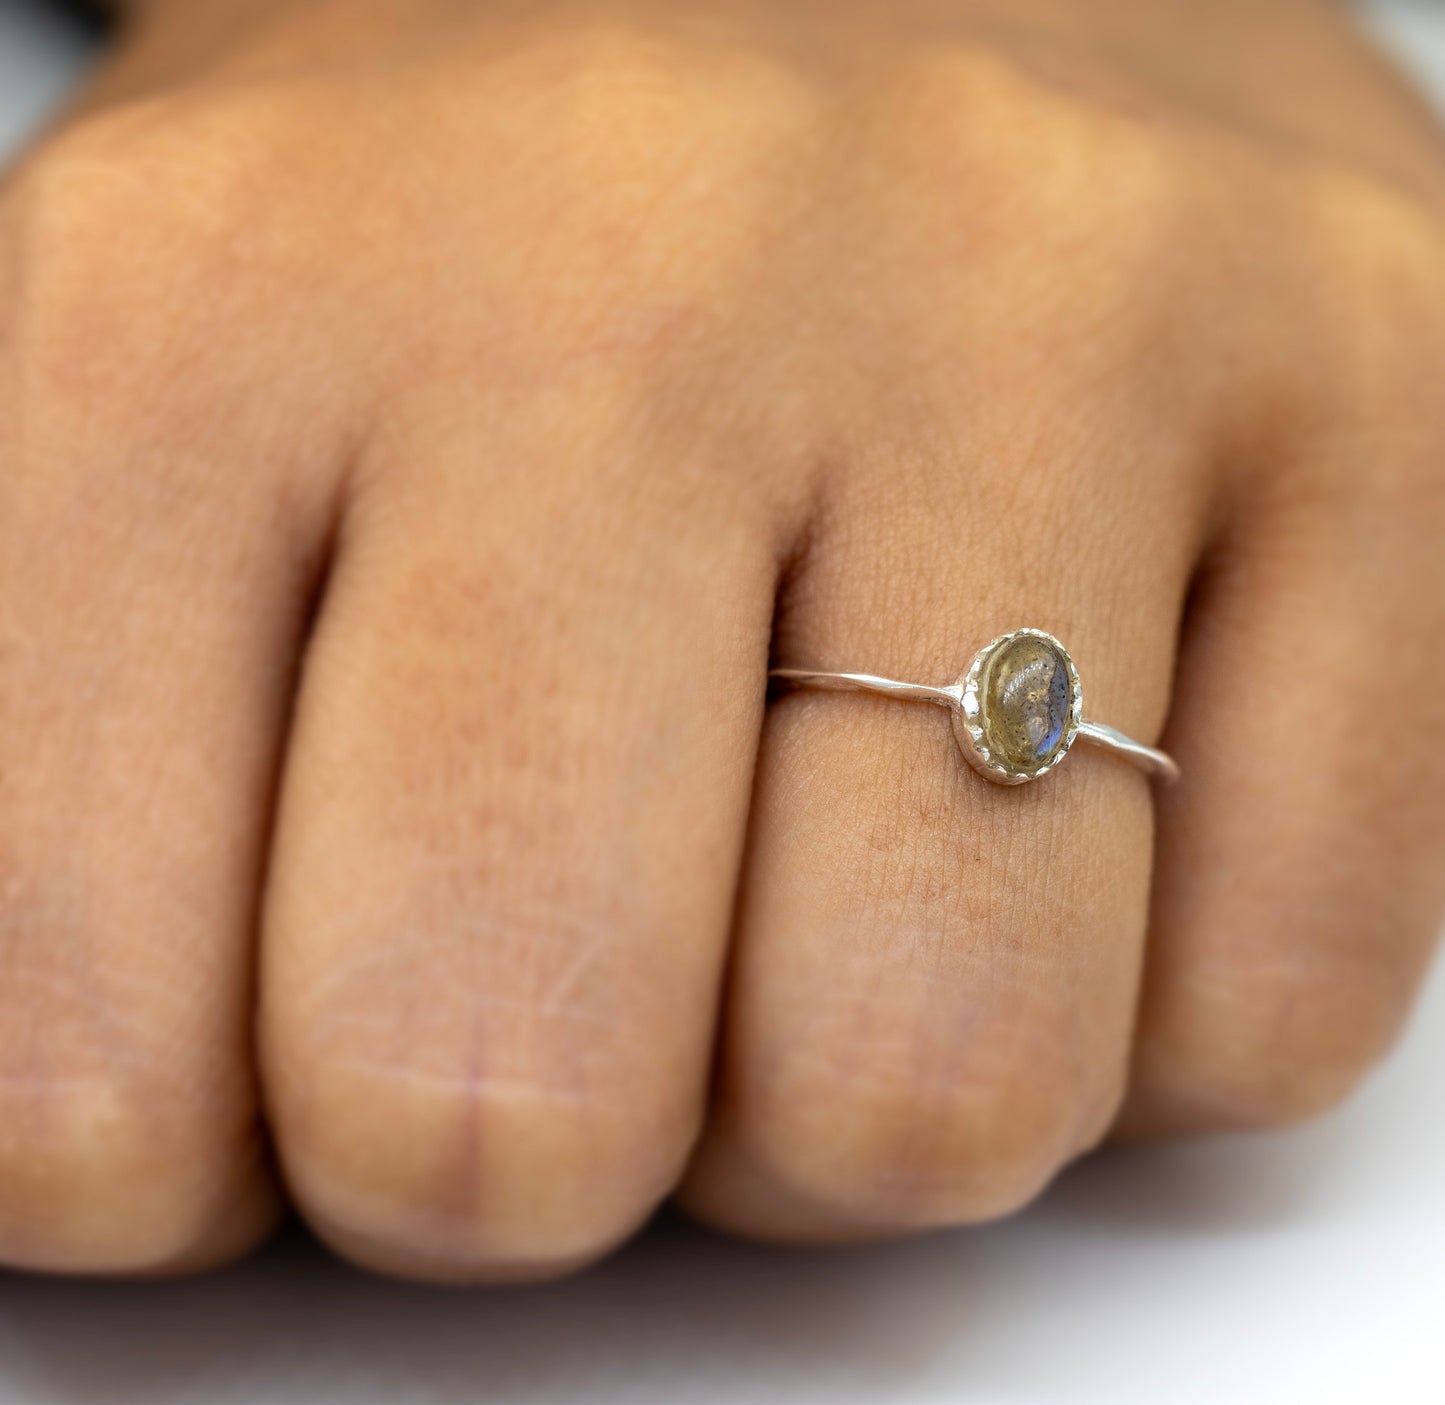 Oval Cut Labradorite Crystal Sterling Silver Dainty Ring Ladies Jewellery Gift Birthday Birthstone